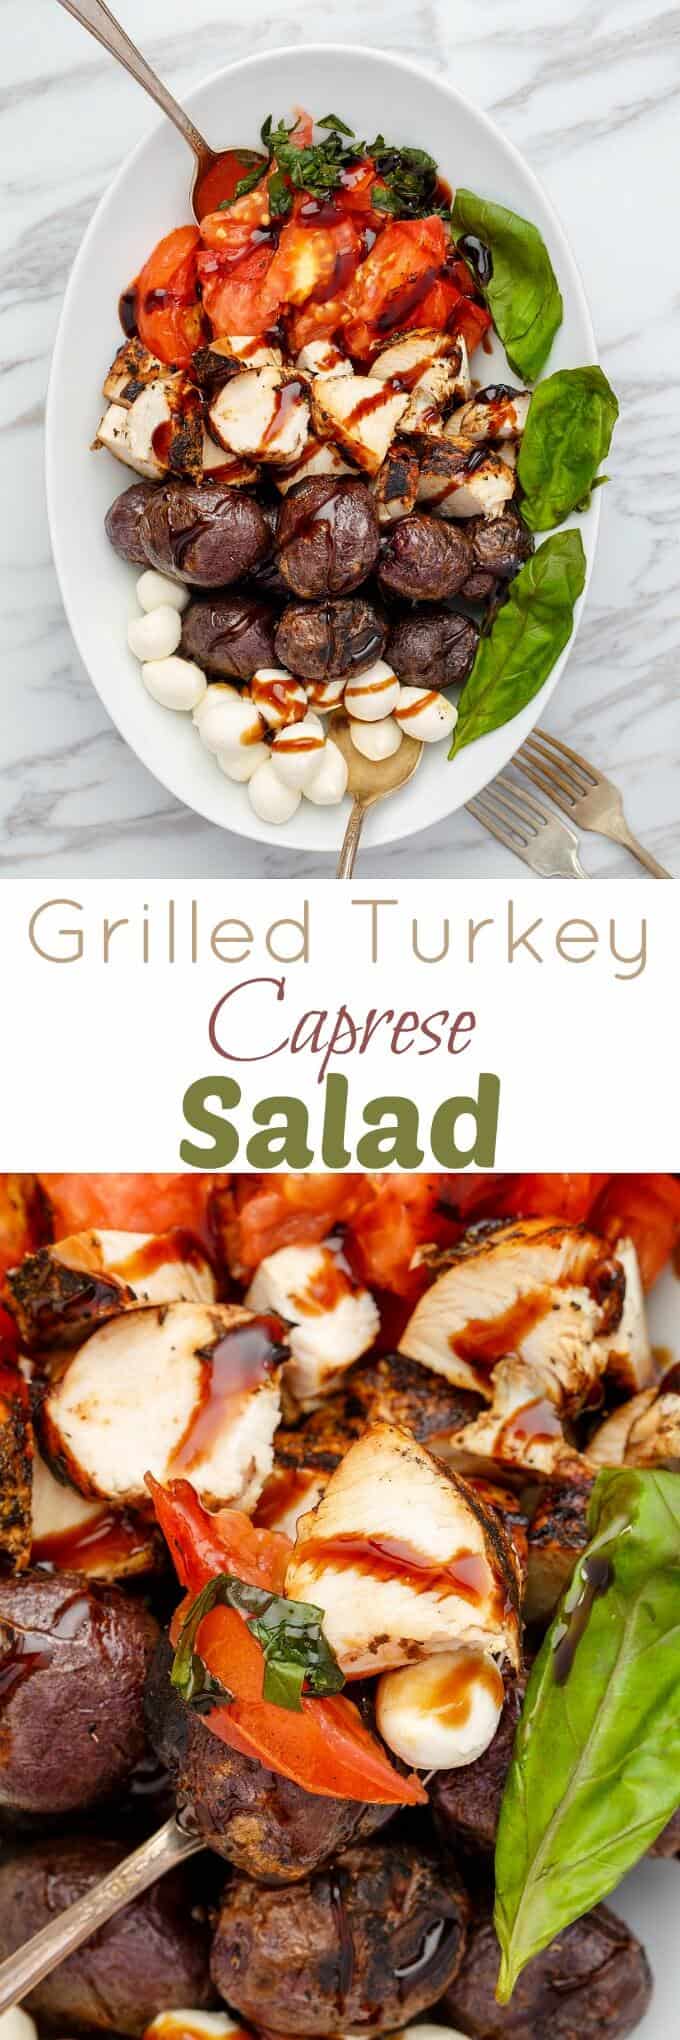 Grilled Turkey Caprese Salad